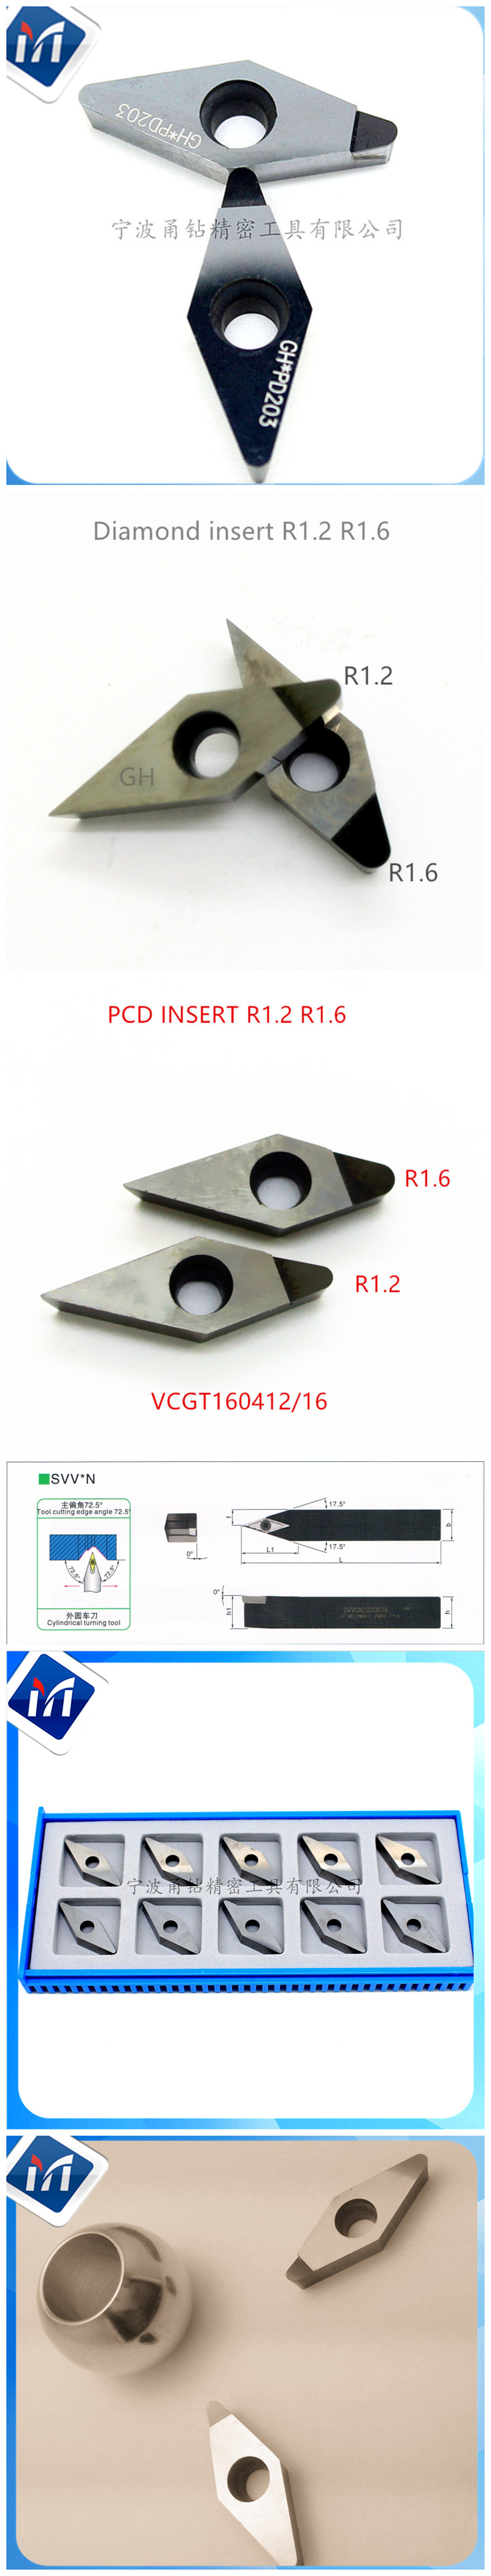 VCGT1604 VCMT160412 VNMG เพชรจัดทำดัชนีกลึงคาร์ไบด์ PCD CNC  แทรกเครื่องมือเครื่องสำหรับการเปลี่ยนอลูมิเนียมฮับล้อทองเหลือง ชิ้น 